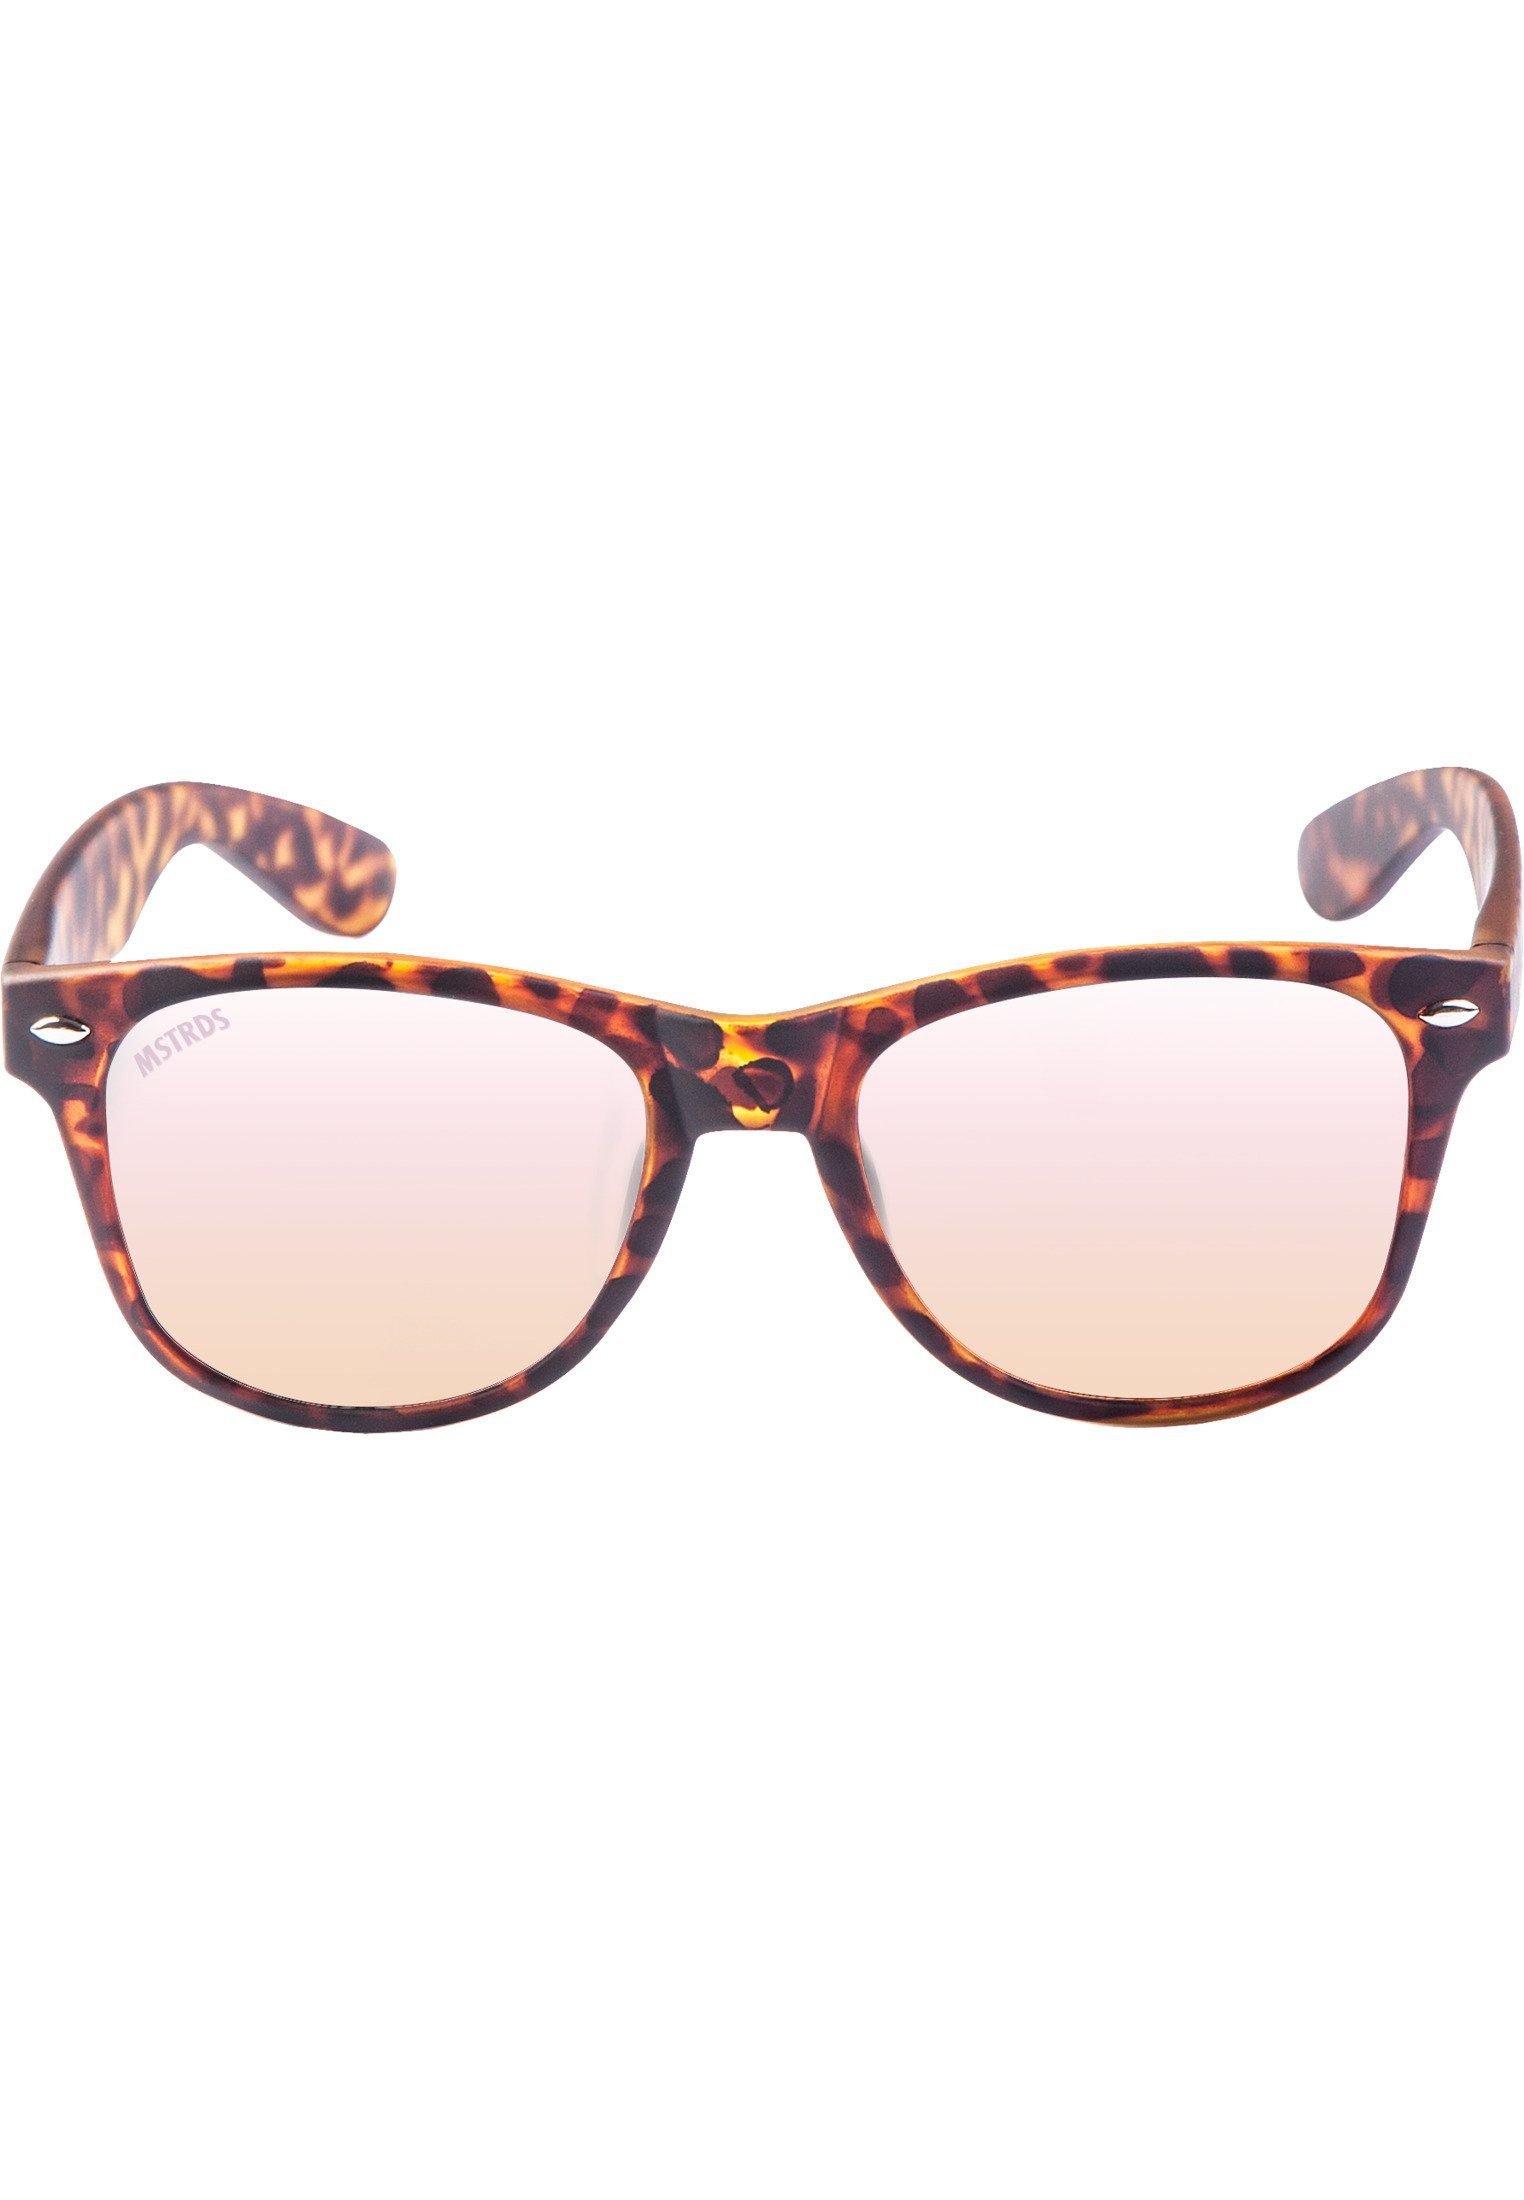 MSTRDS Sonnenbrille Accessoires havanna/rosé Likoma Youth Sunglasses